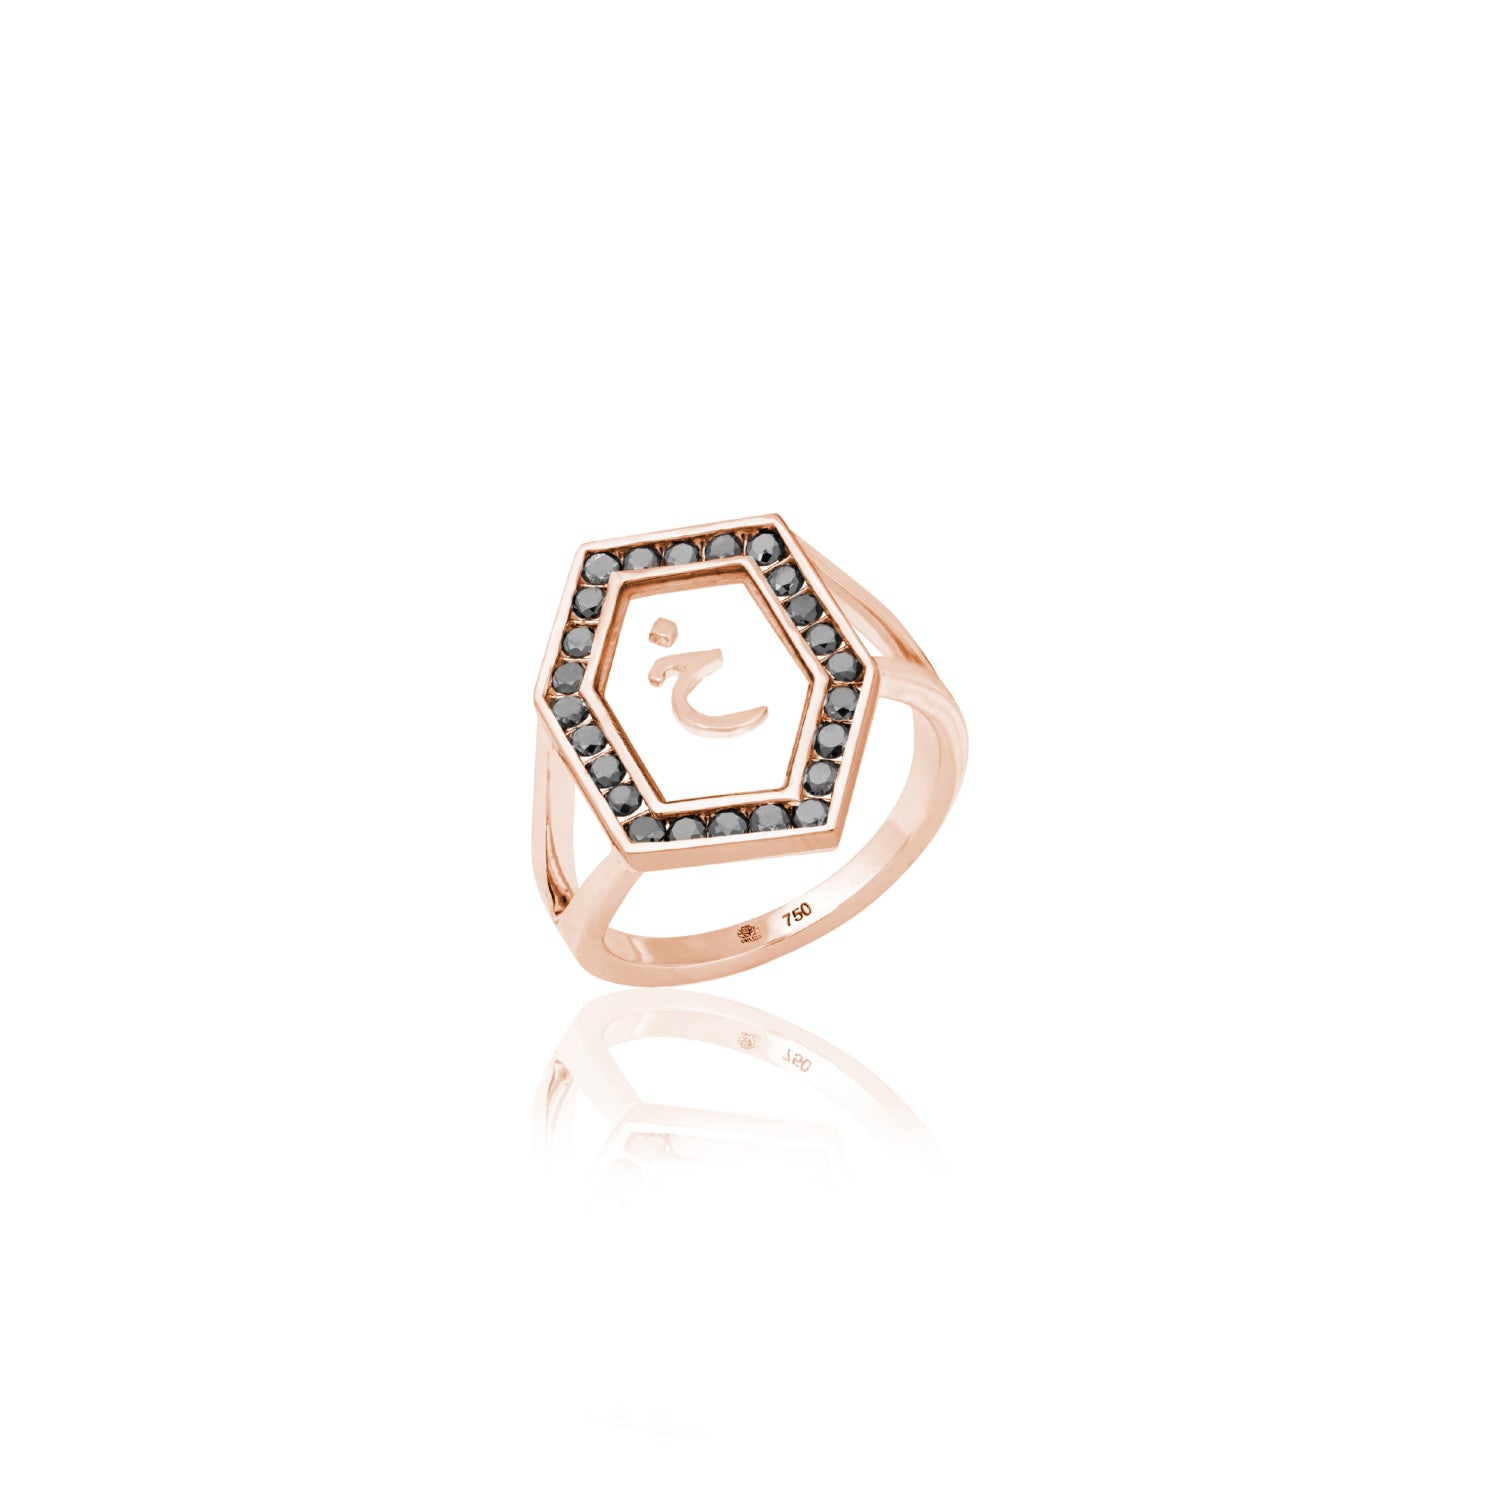 Qamoos 1.0 Letter خ Black Diamond Ring in Rose Gold